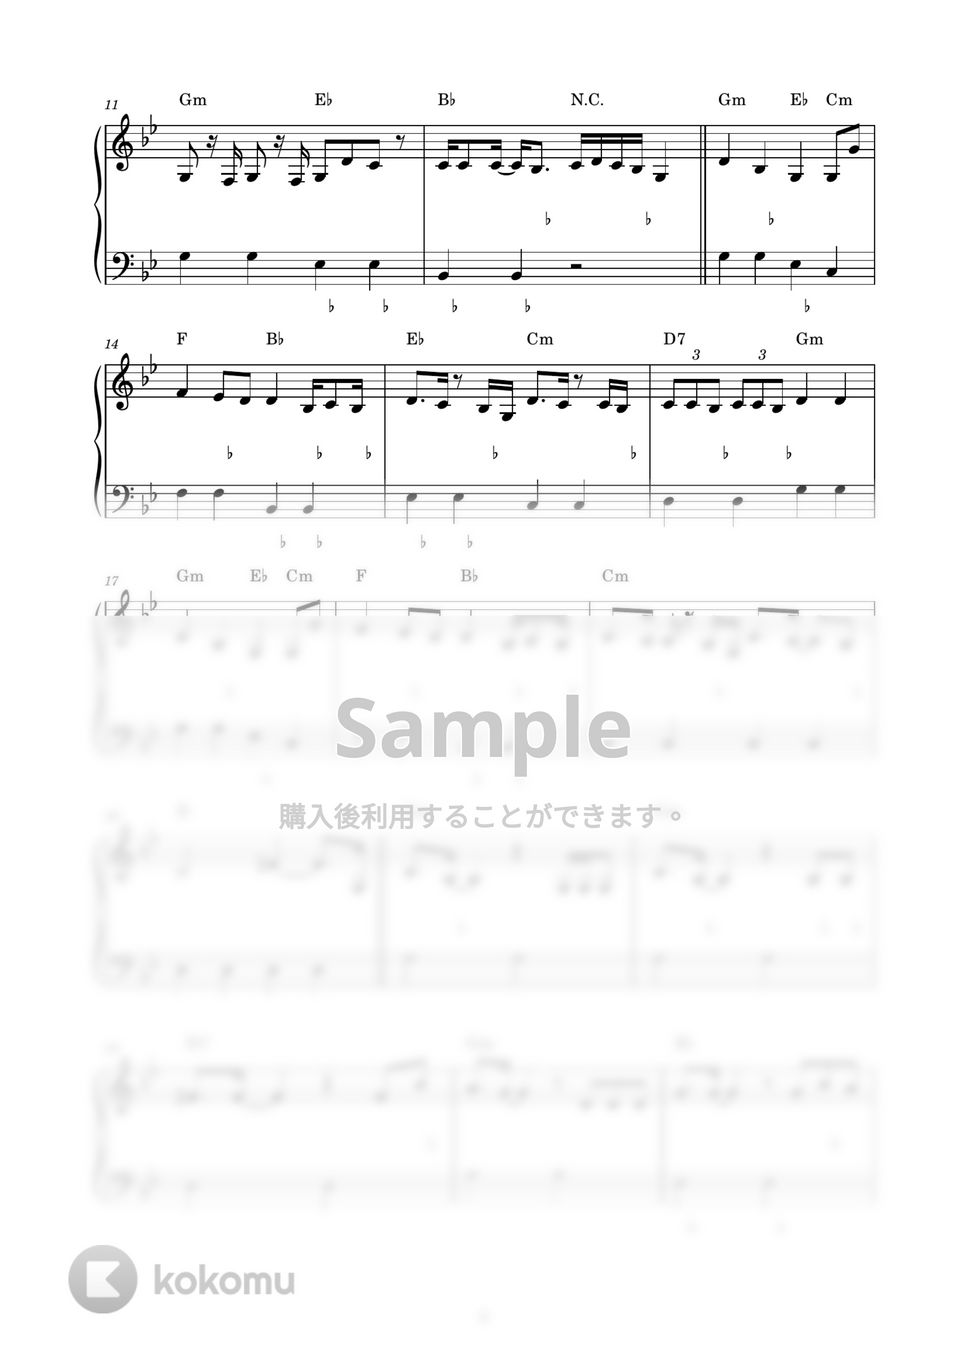 King & Prince - ツキヨミ (ピアノ楽譜 / かんたん両手 / 歌詞付き / ドレミ付き / 初心者向き) by piano.tokyo